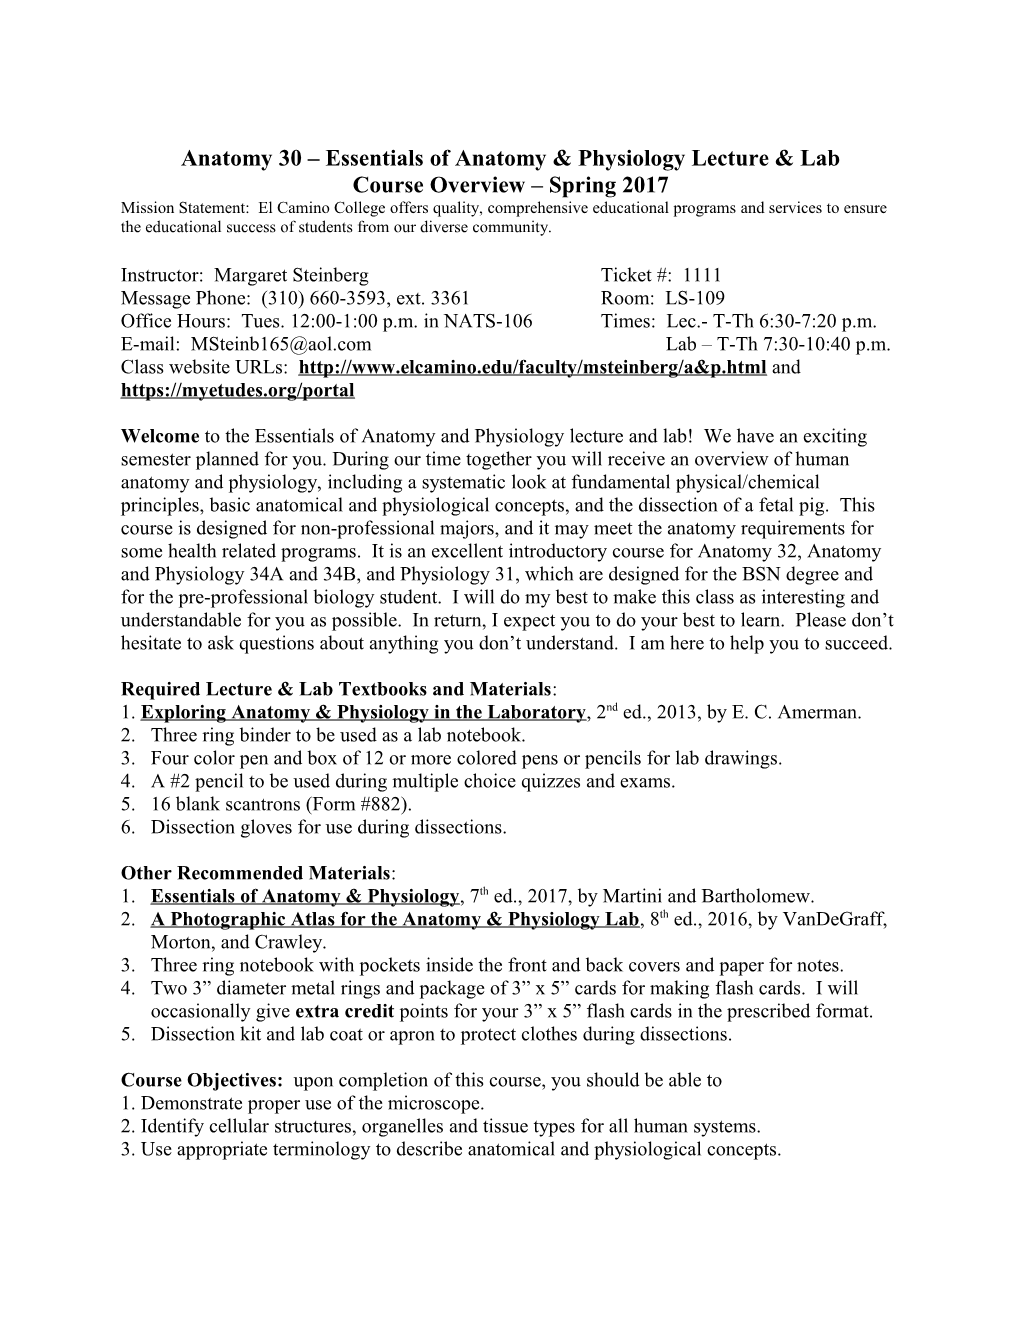 Biology 11 - Human Anatomy Tentative Lecture & Lab Schedule, Spring 2000